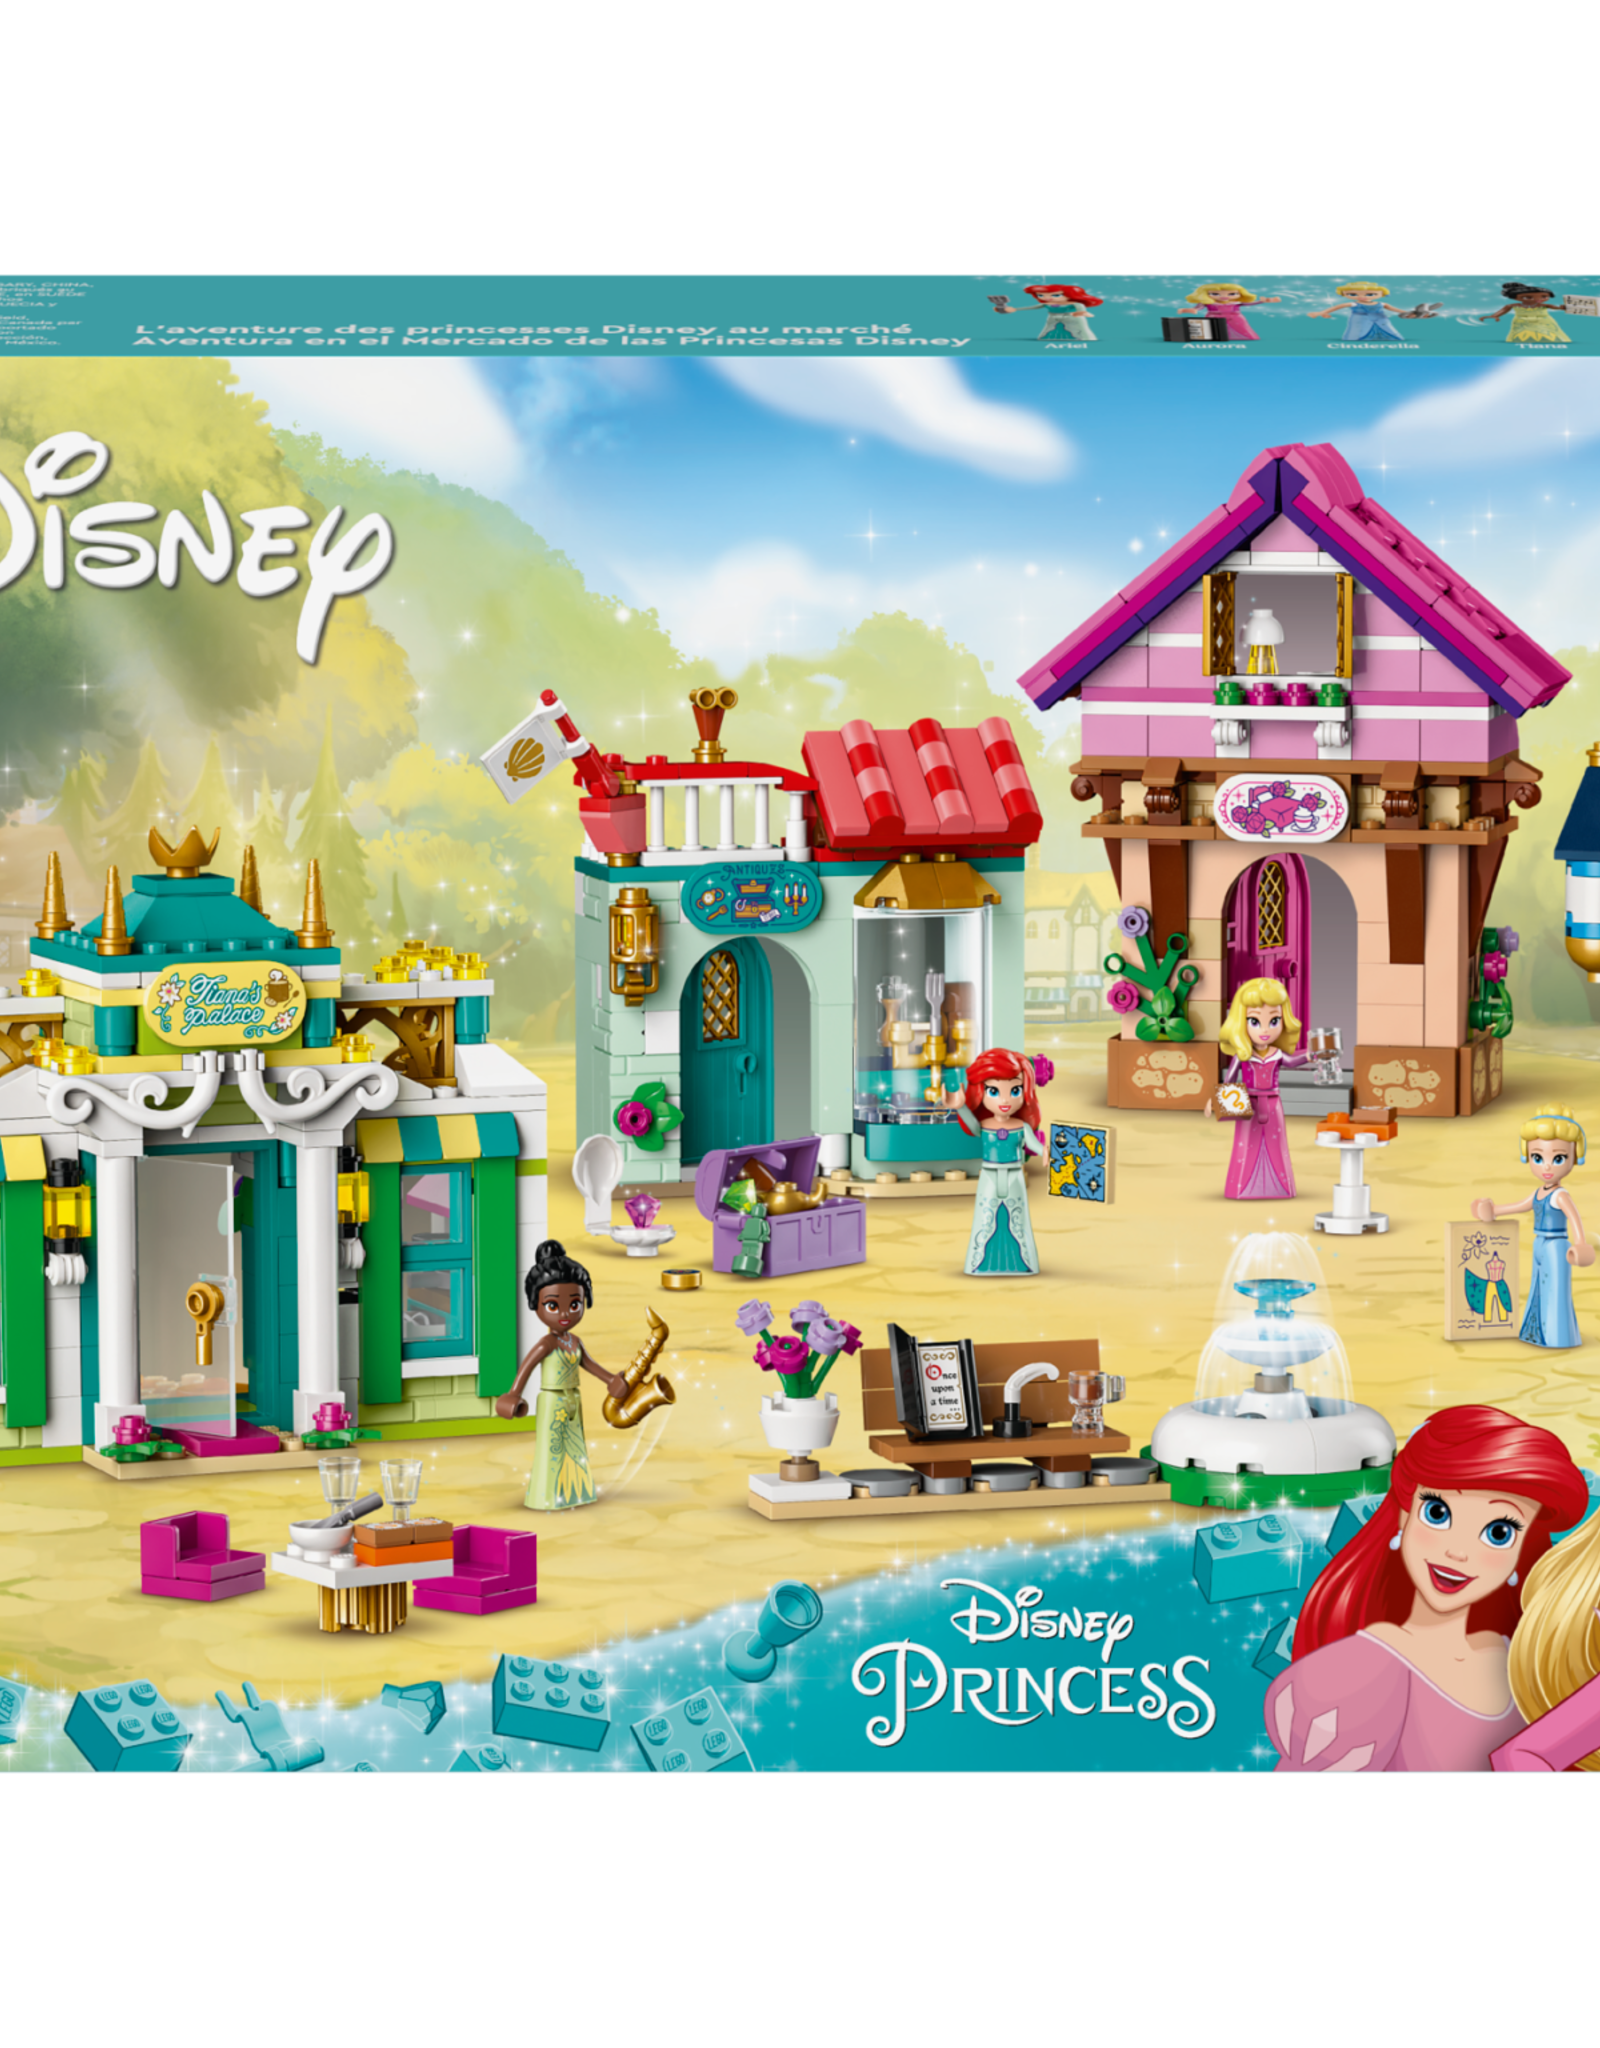 Lego Disney Princess Market Adventure